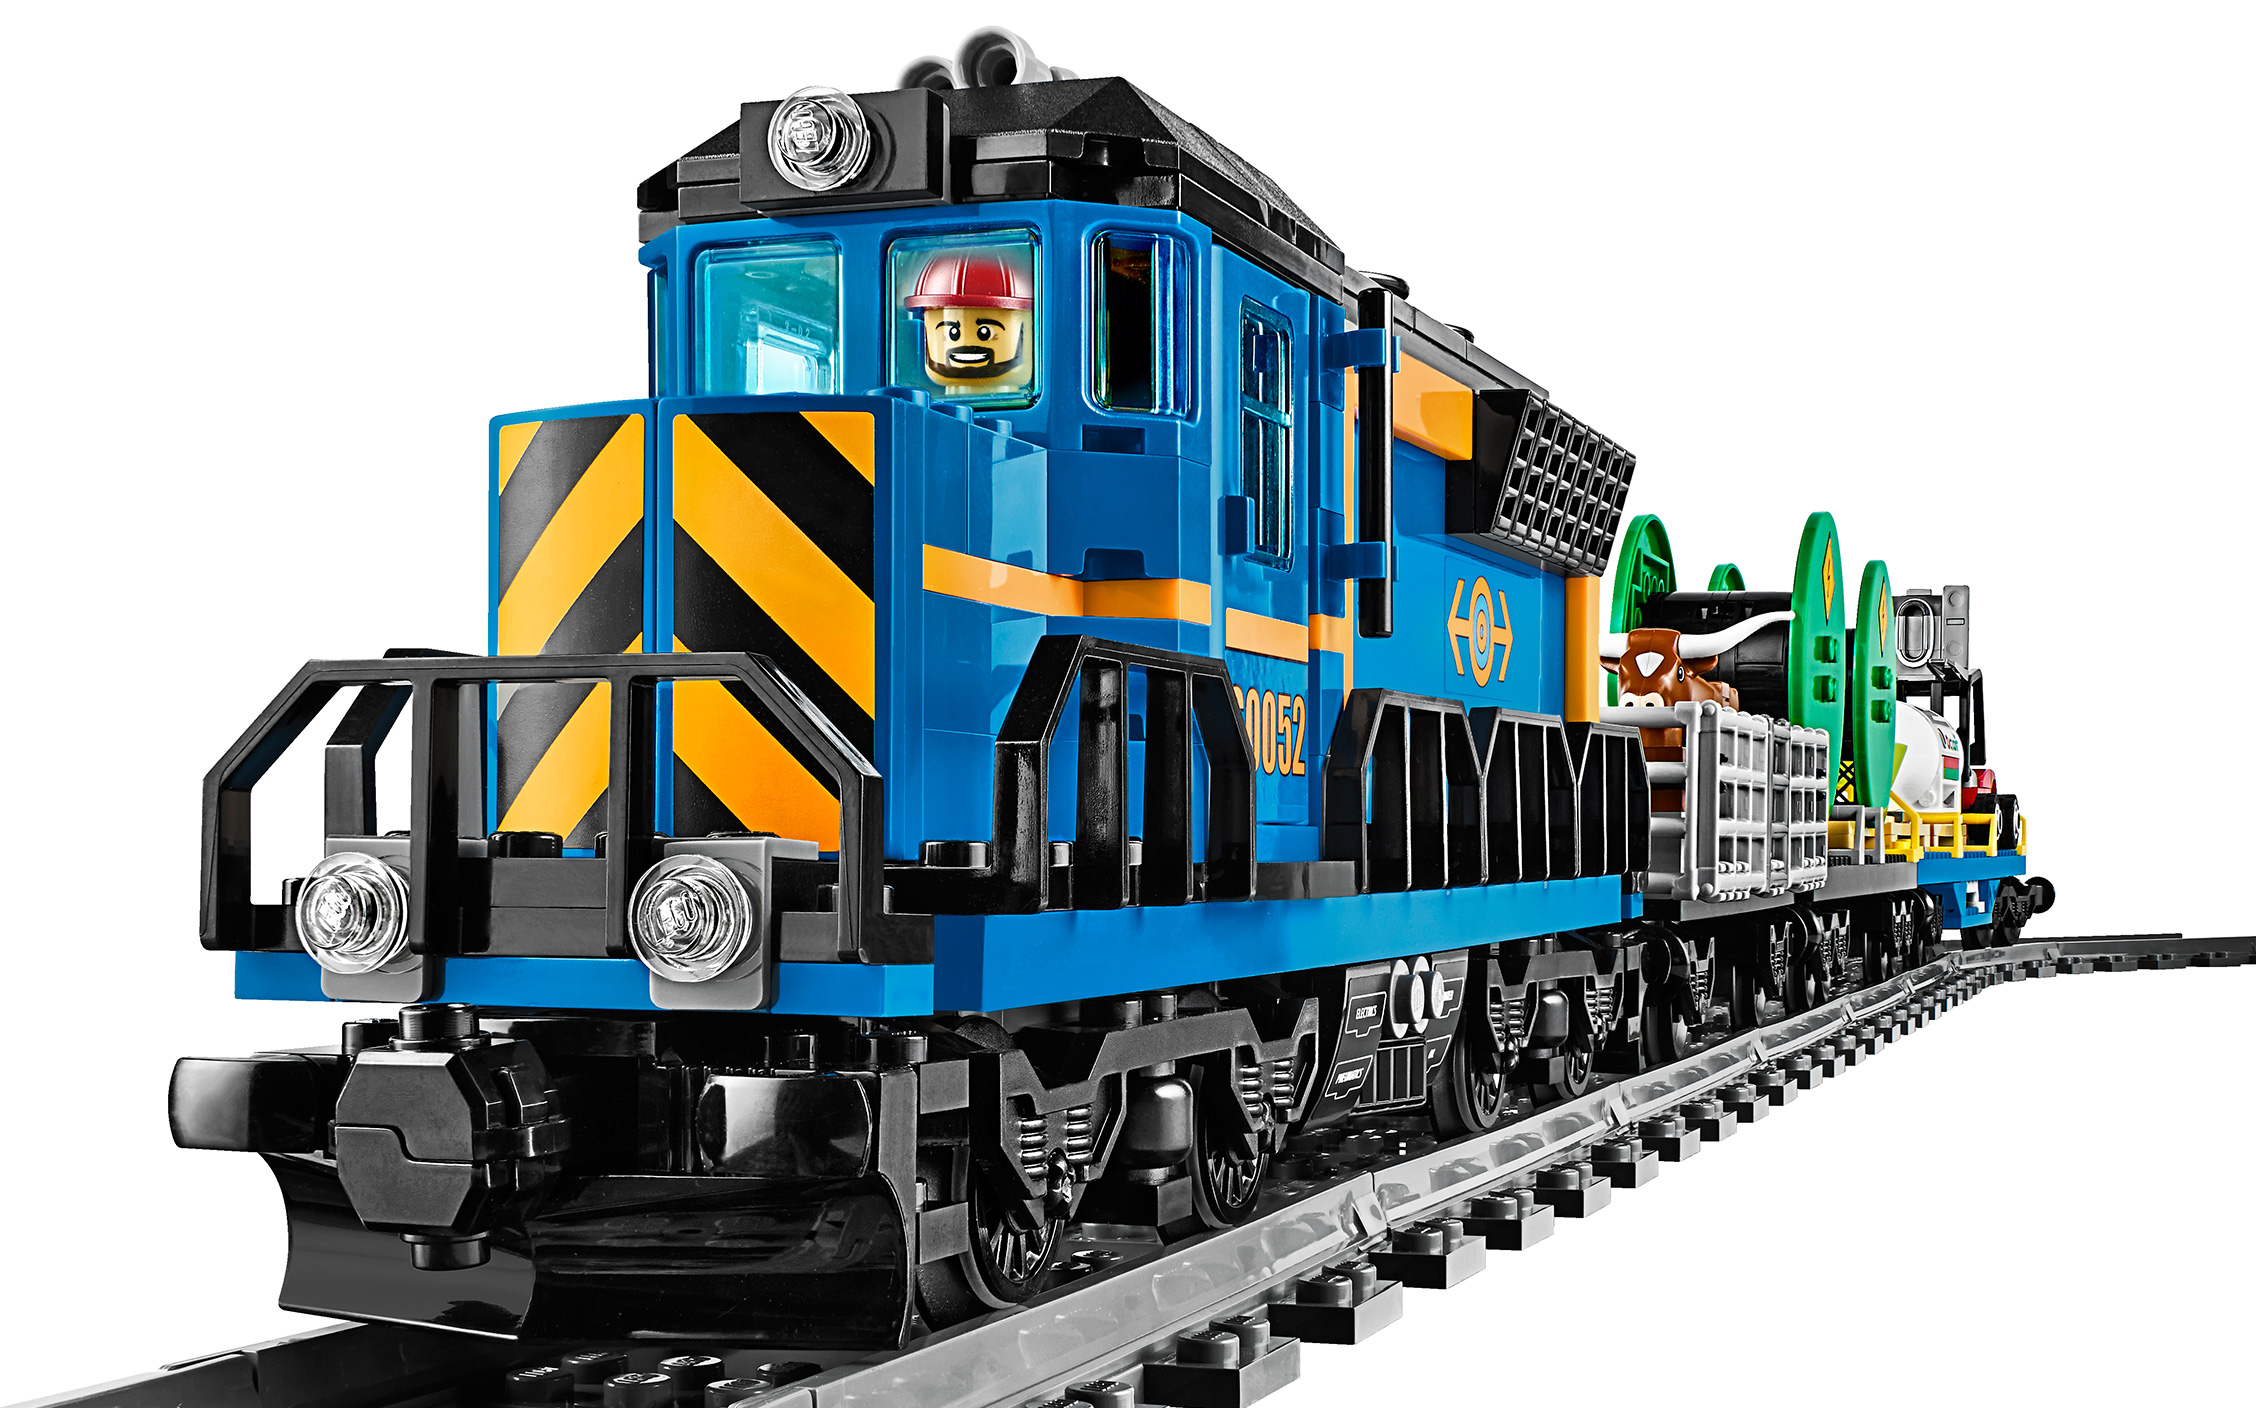 lego city blue train